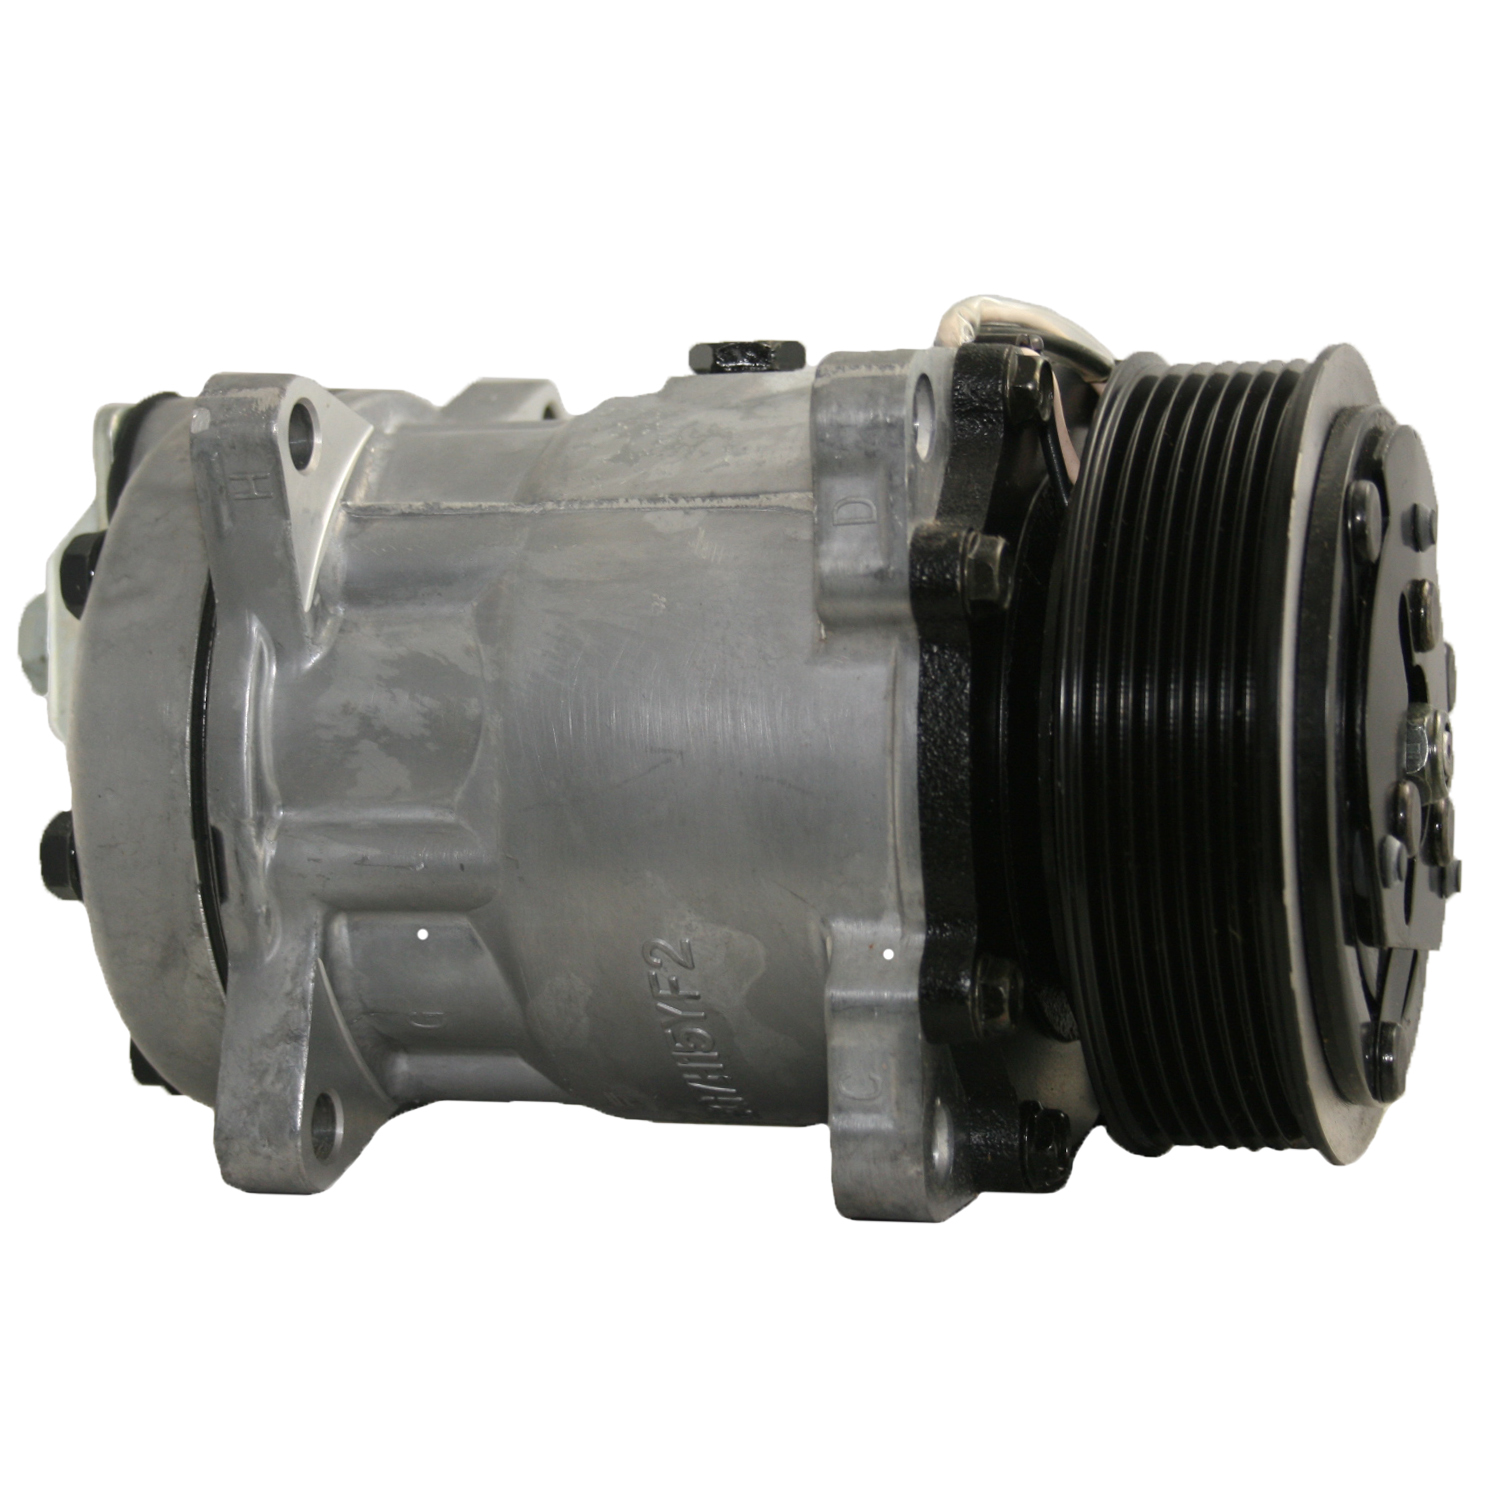 TCW Compressor 40552.701NEW New Product Image field_60b6a13a6e67c